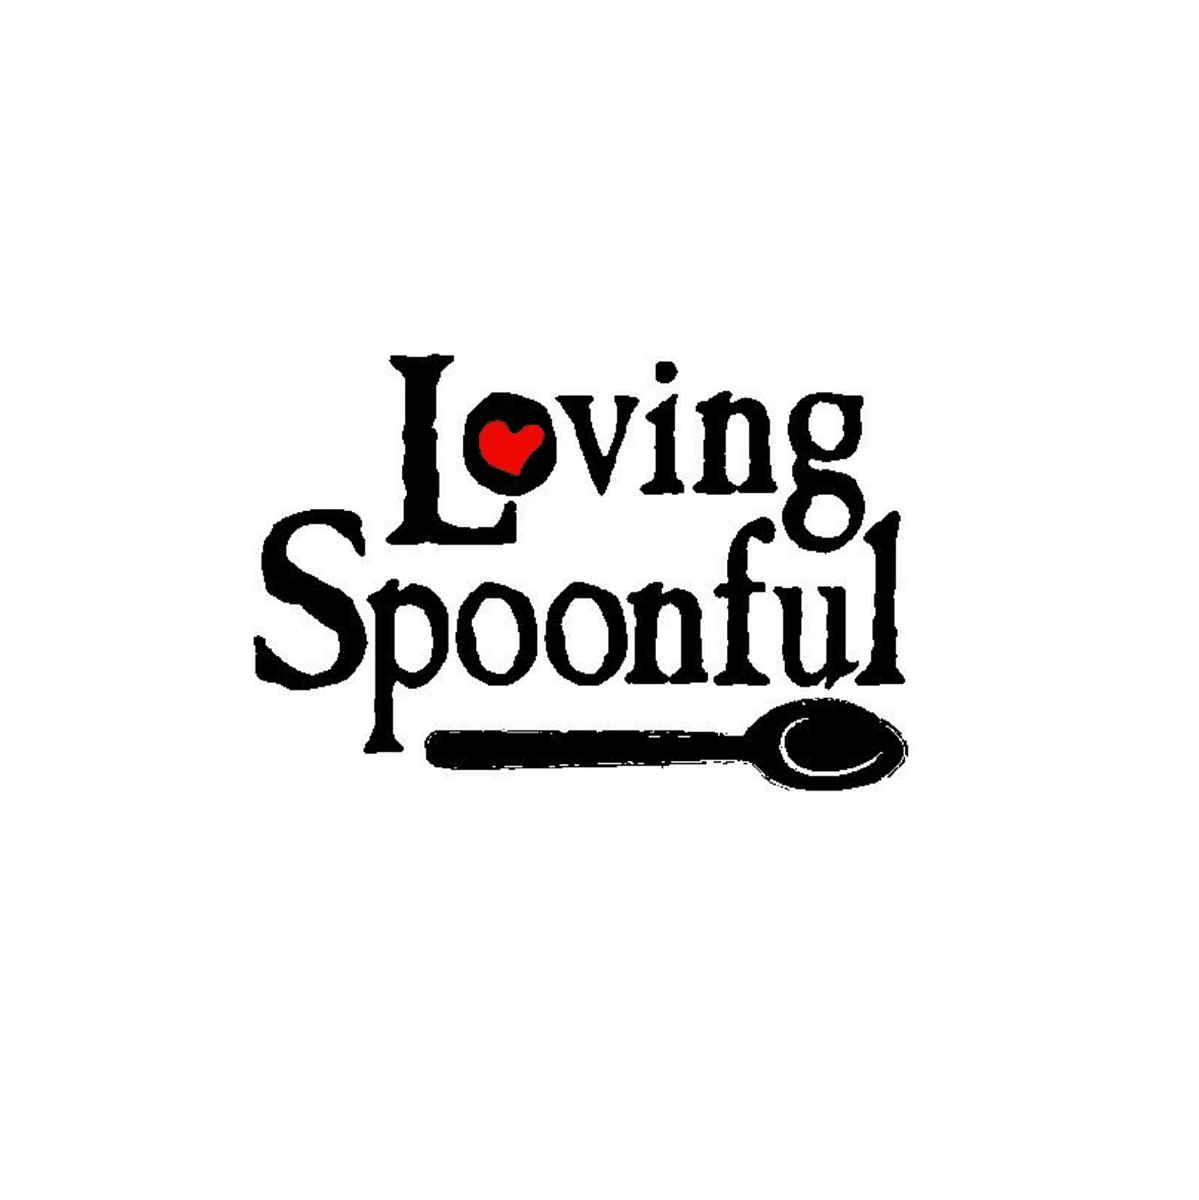 Loving Spoonful